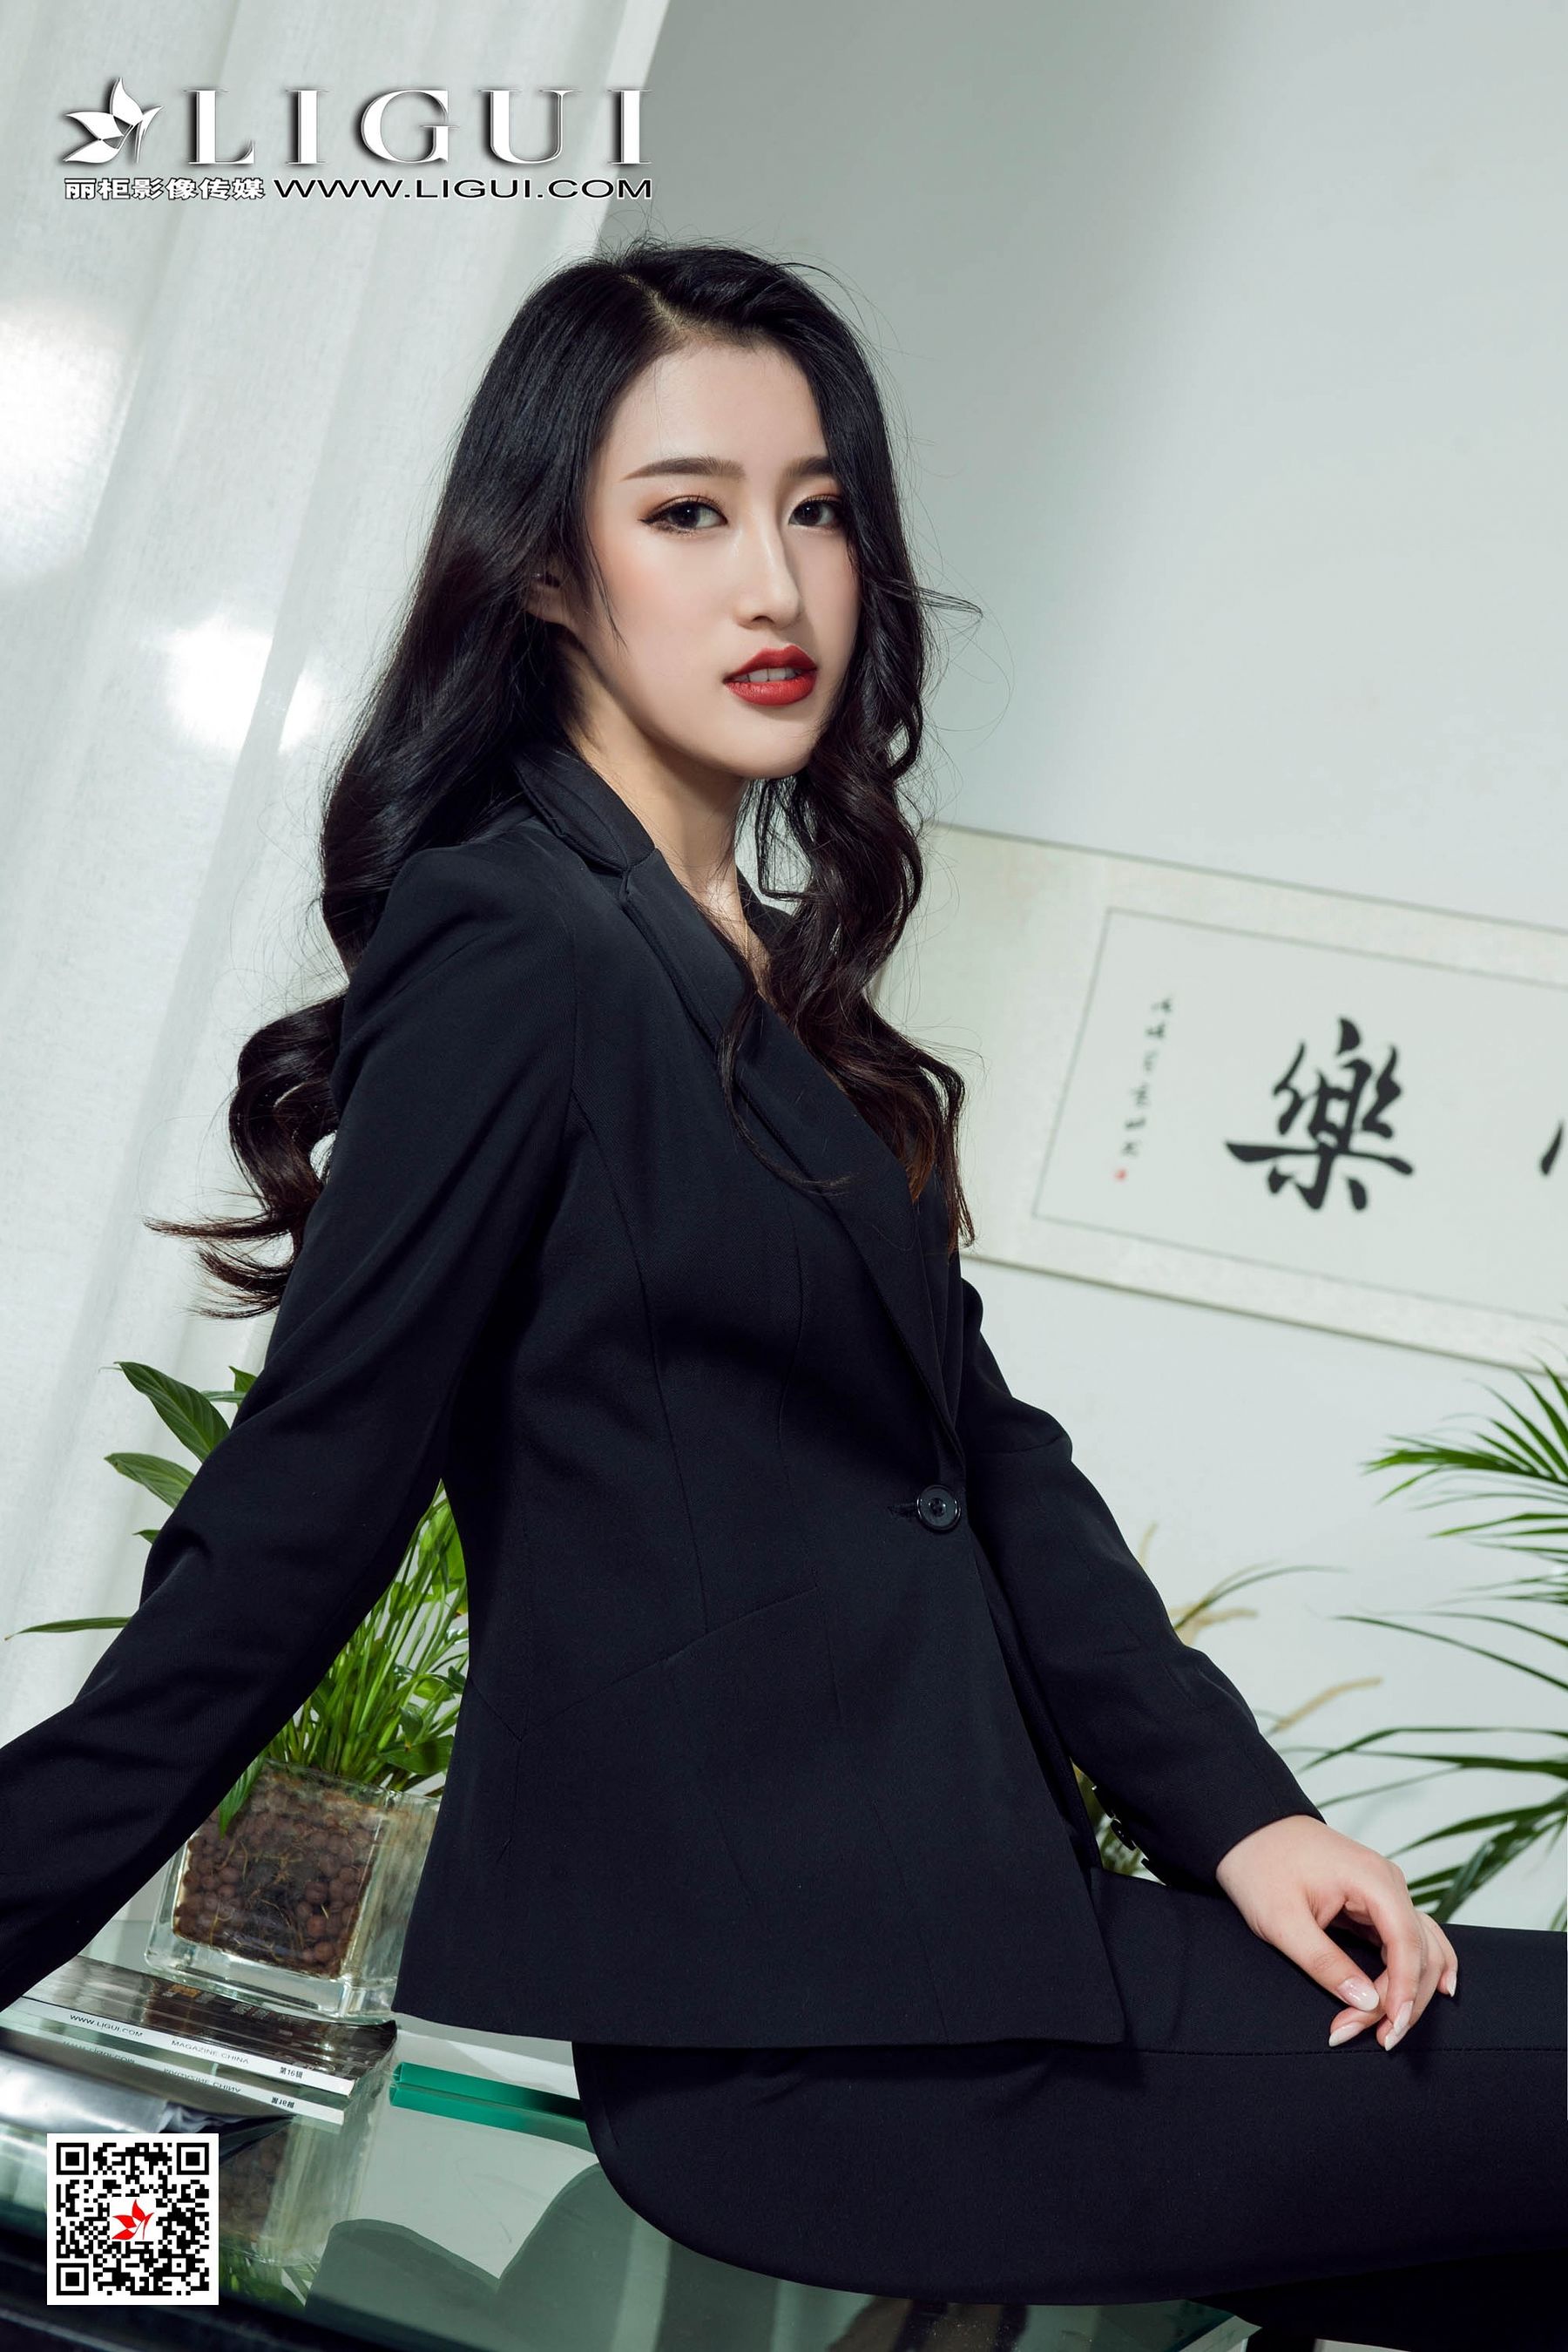 Leg model “Xiglo” [柜 ligui] online beauty photo collection